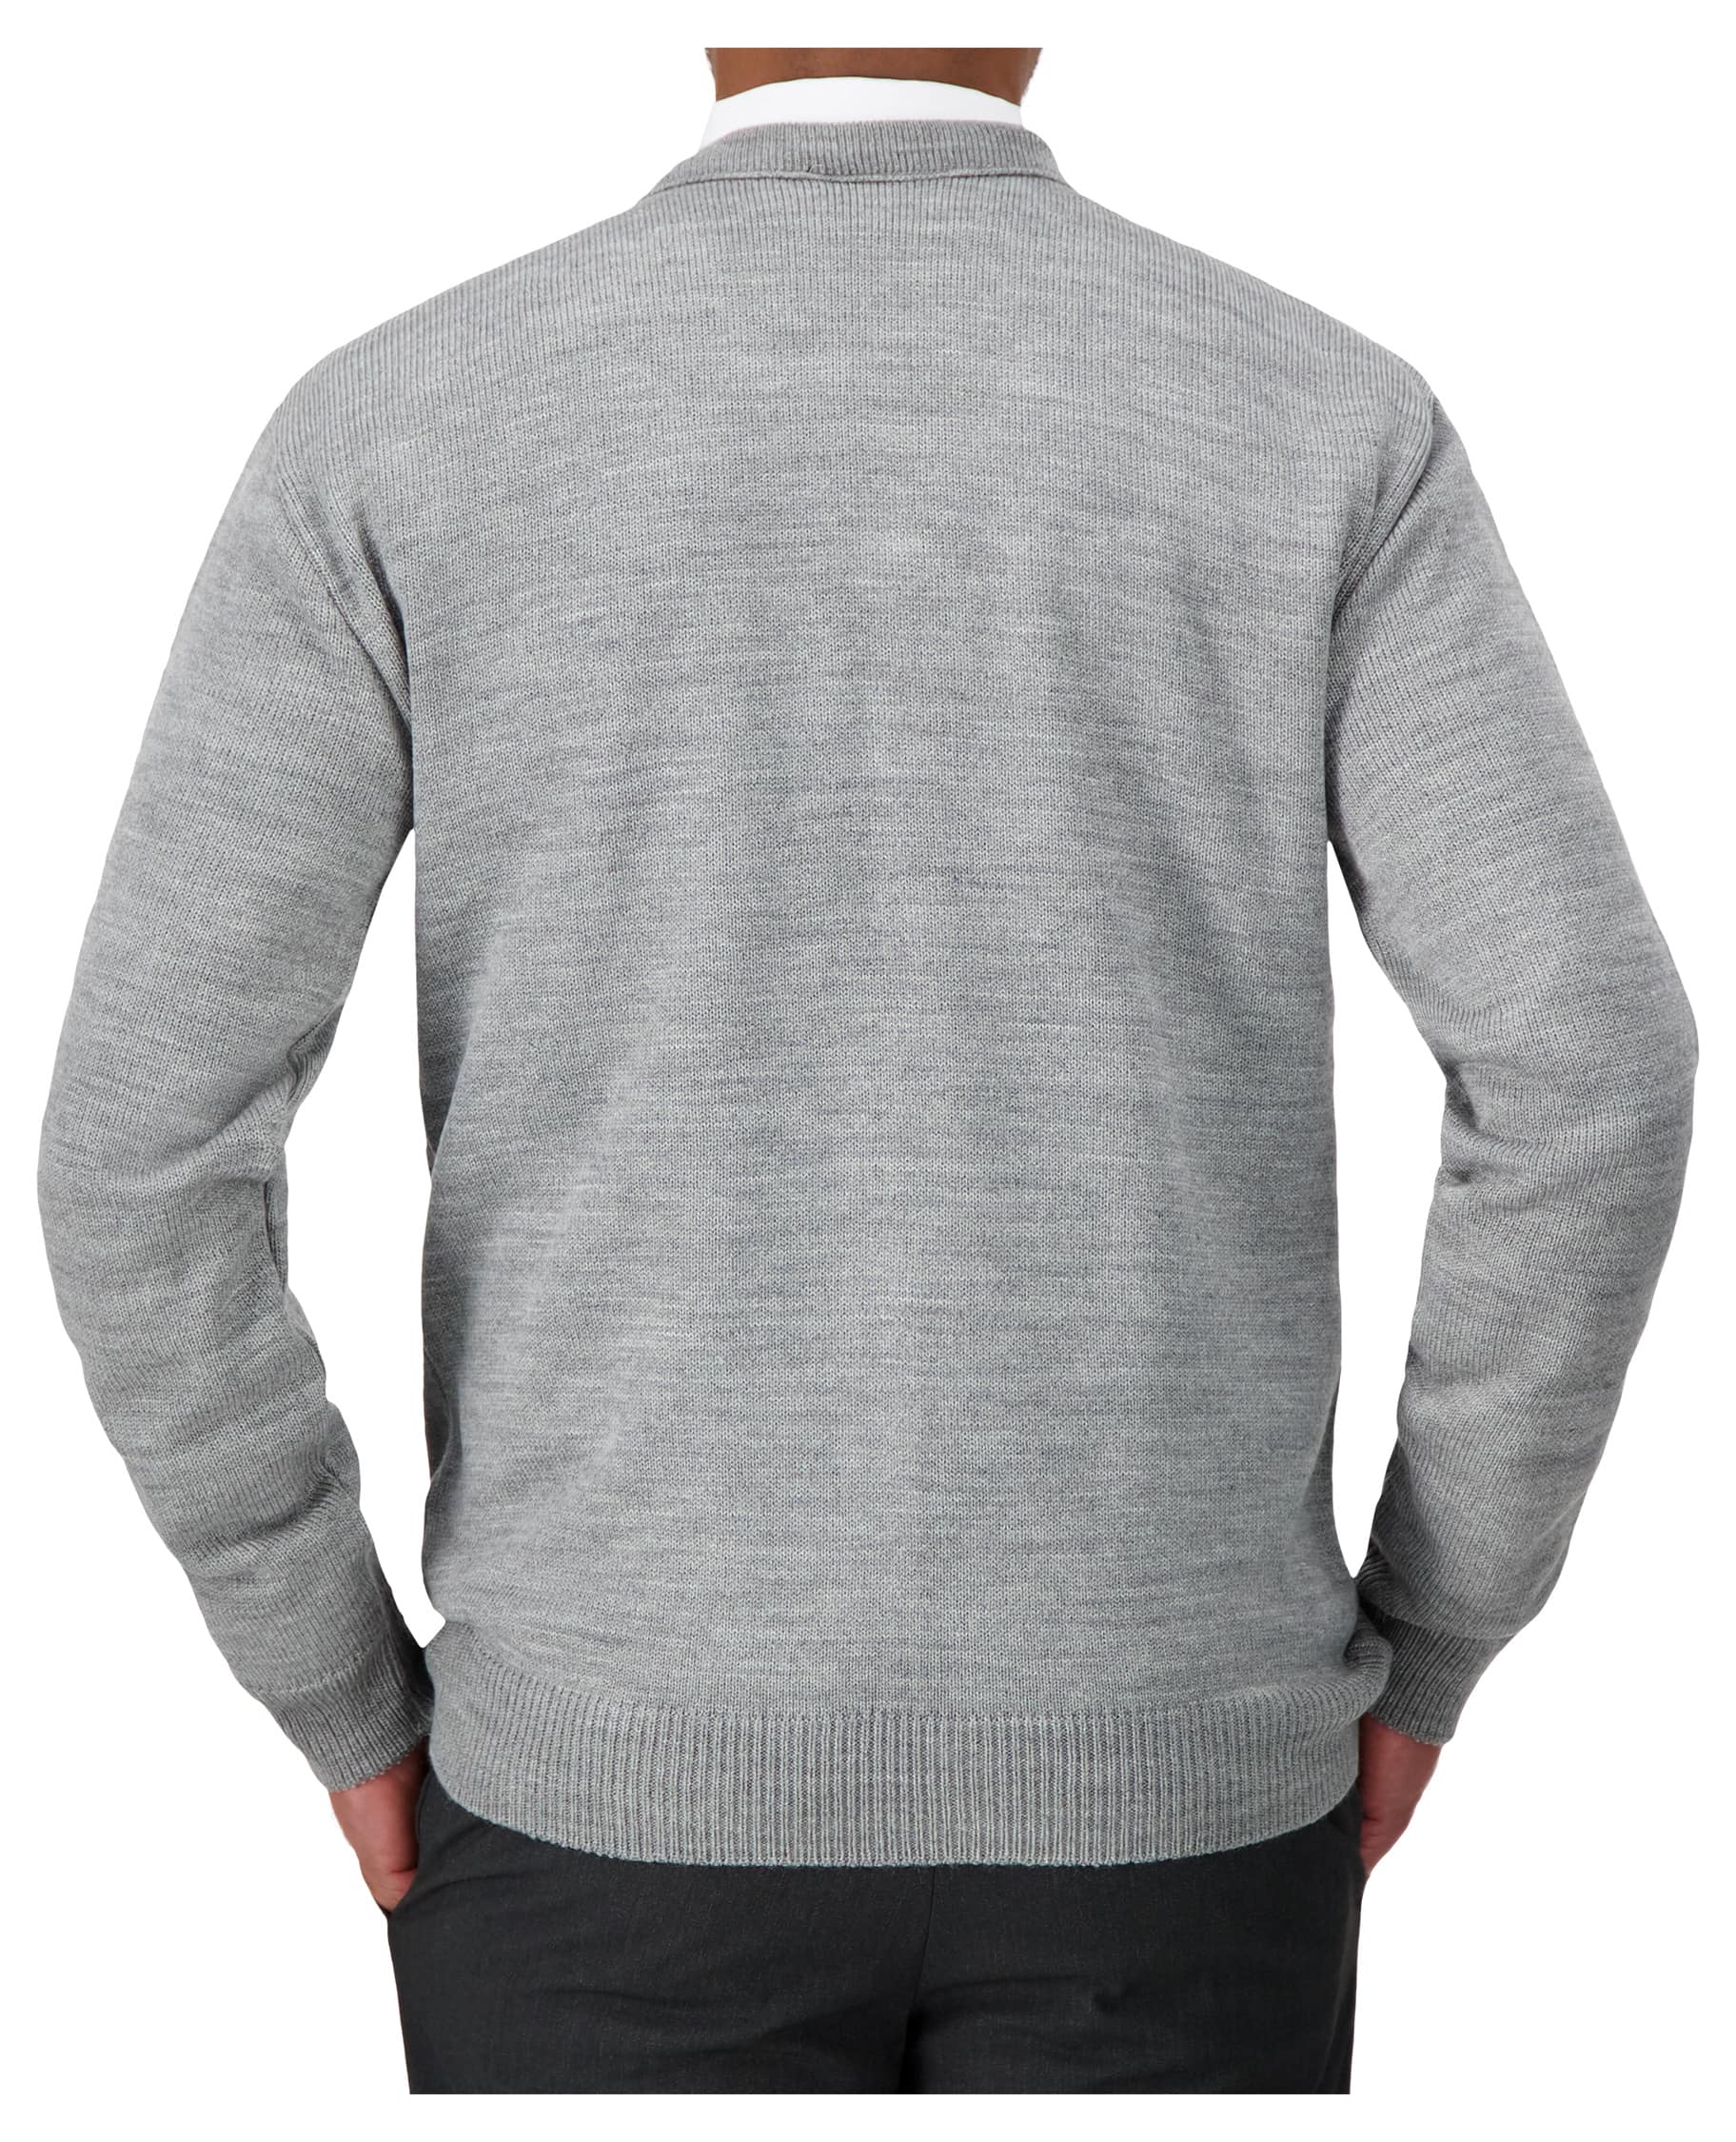 back of grey v-neck corporate sweater